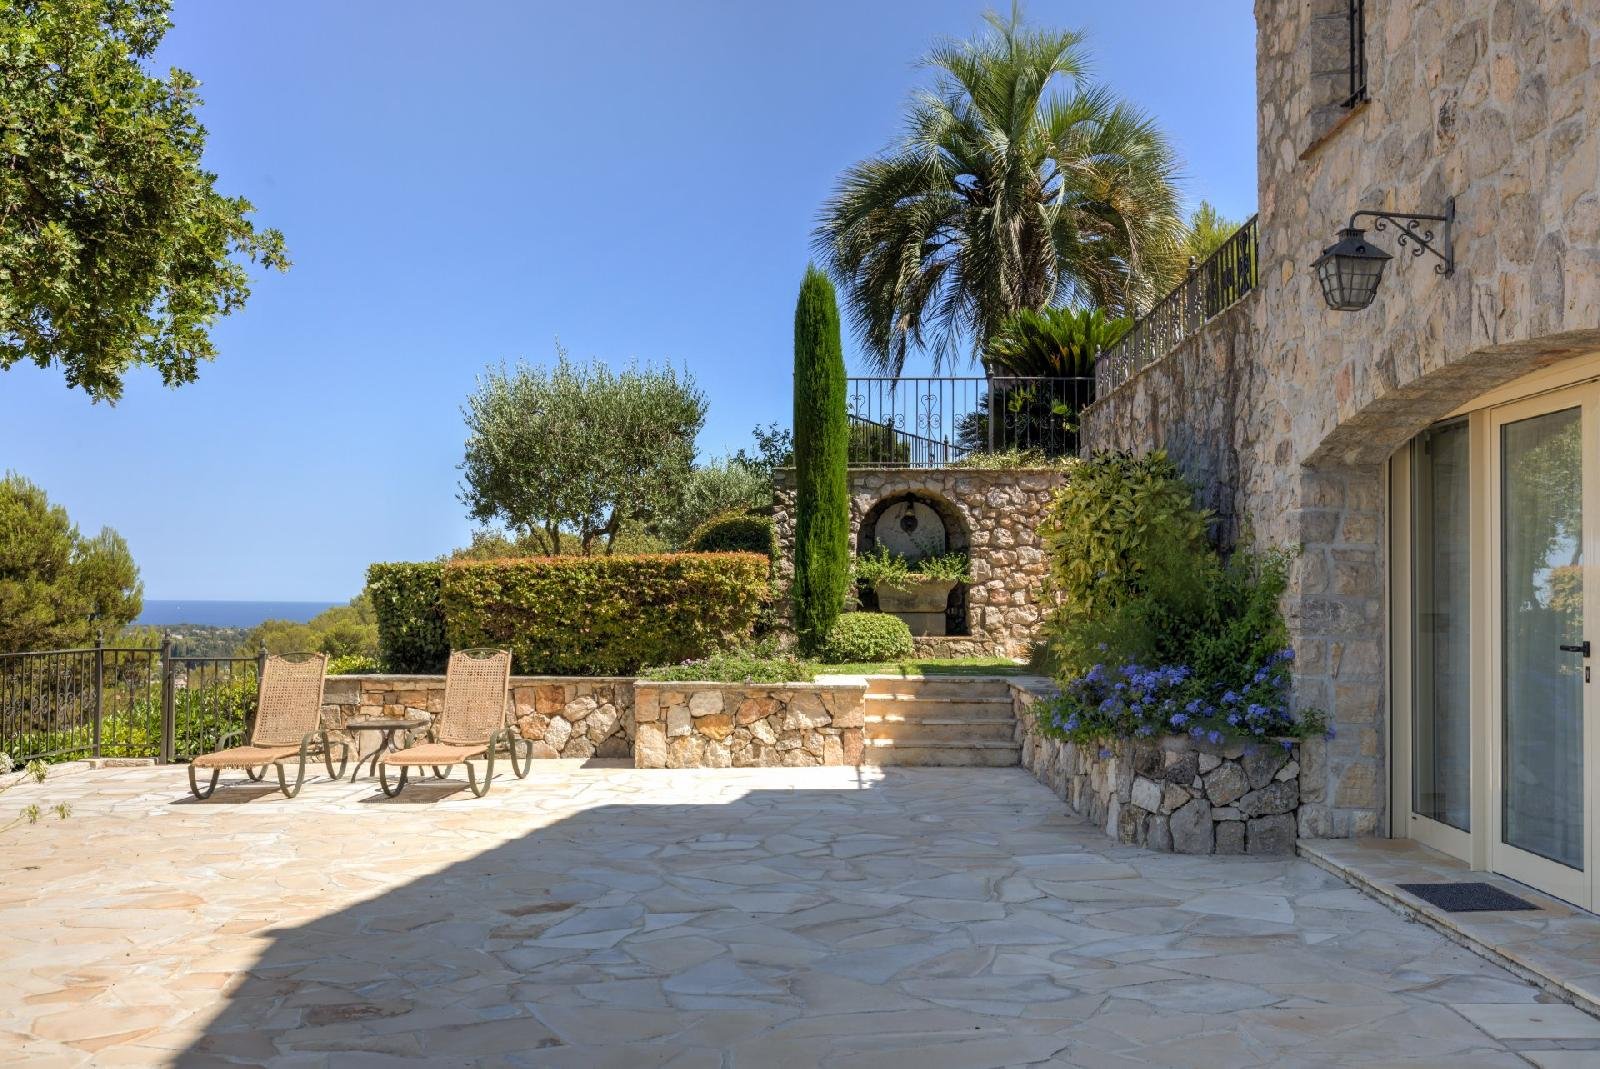 Francis York Charming French Riviera Villa With Hilltop Village And Sea Views 28.jpg